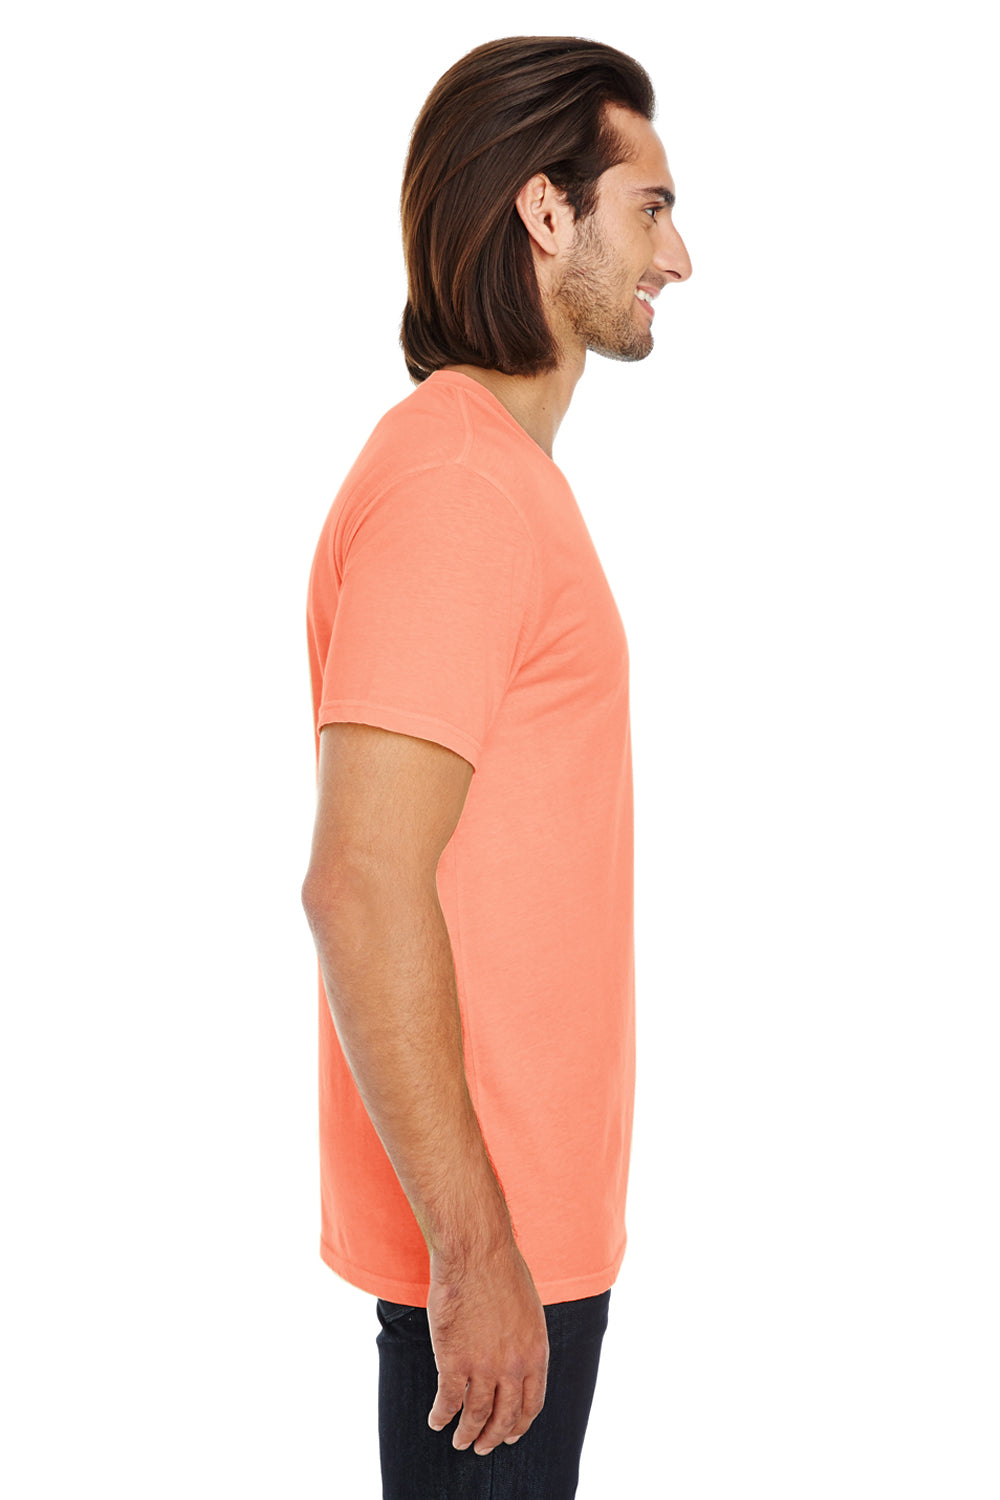 Threadfast Apparel 130A Mens Short Sleeve Crewneck T-Shirt Tangerine Orange Side